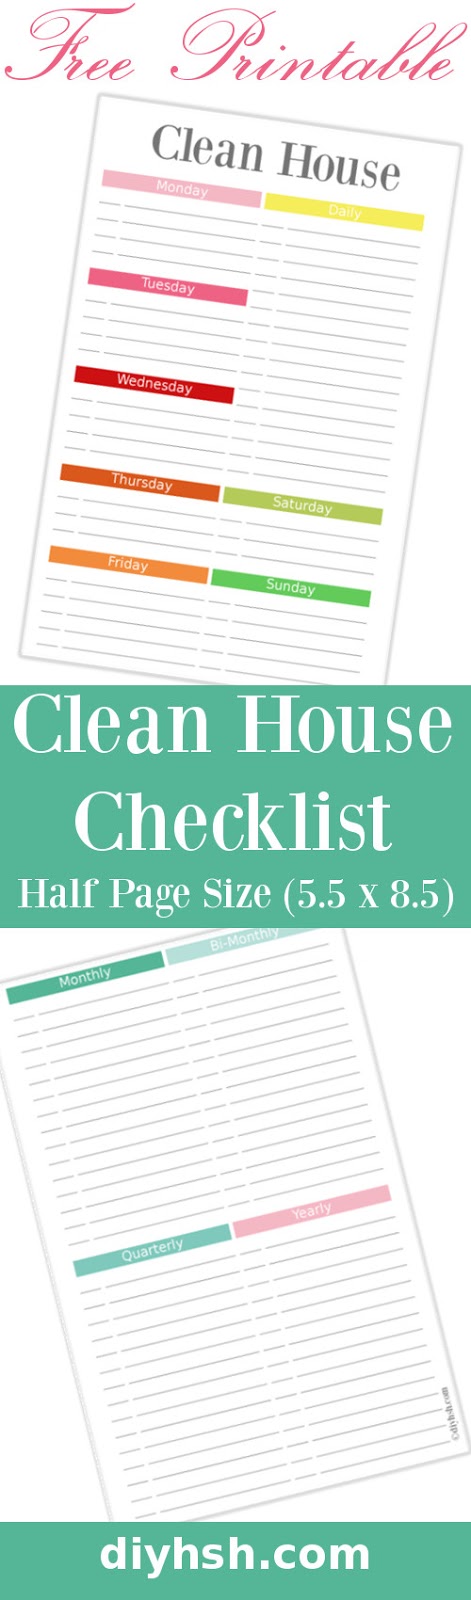 Clean House Checklist - Free Printable (5.5 x 8.5) - DIY Home Sweet Home